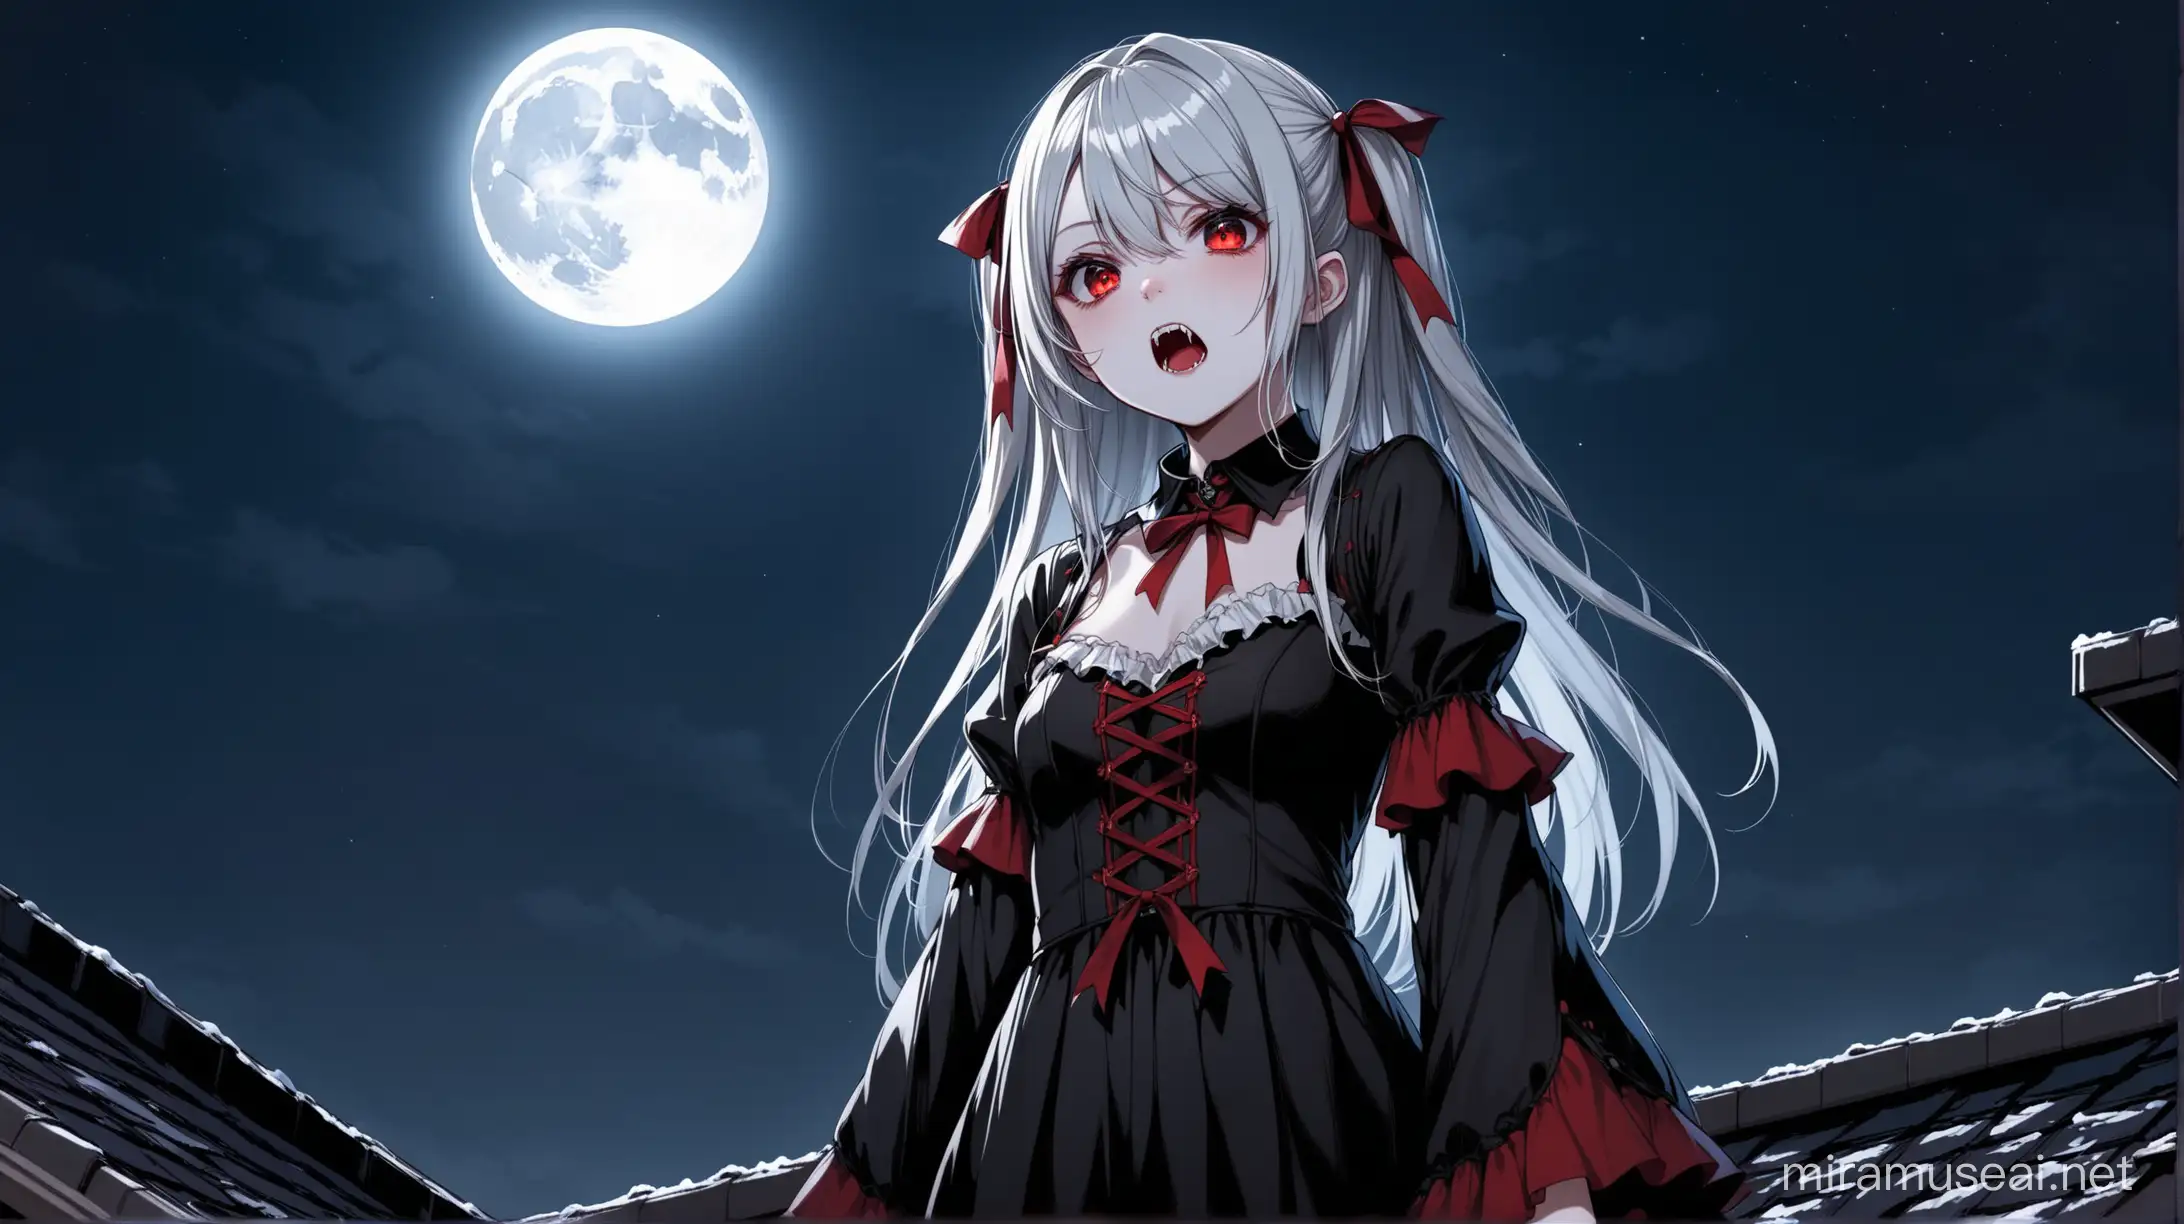 Cute Vampire Girl Chloe Sakamata Stands on Rooftop Under Moonlight